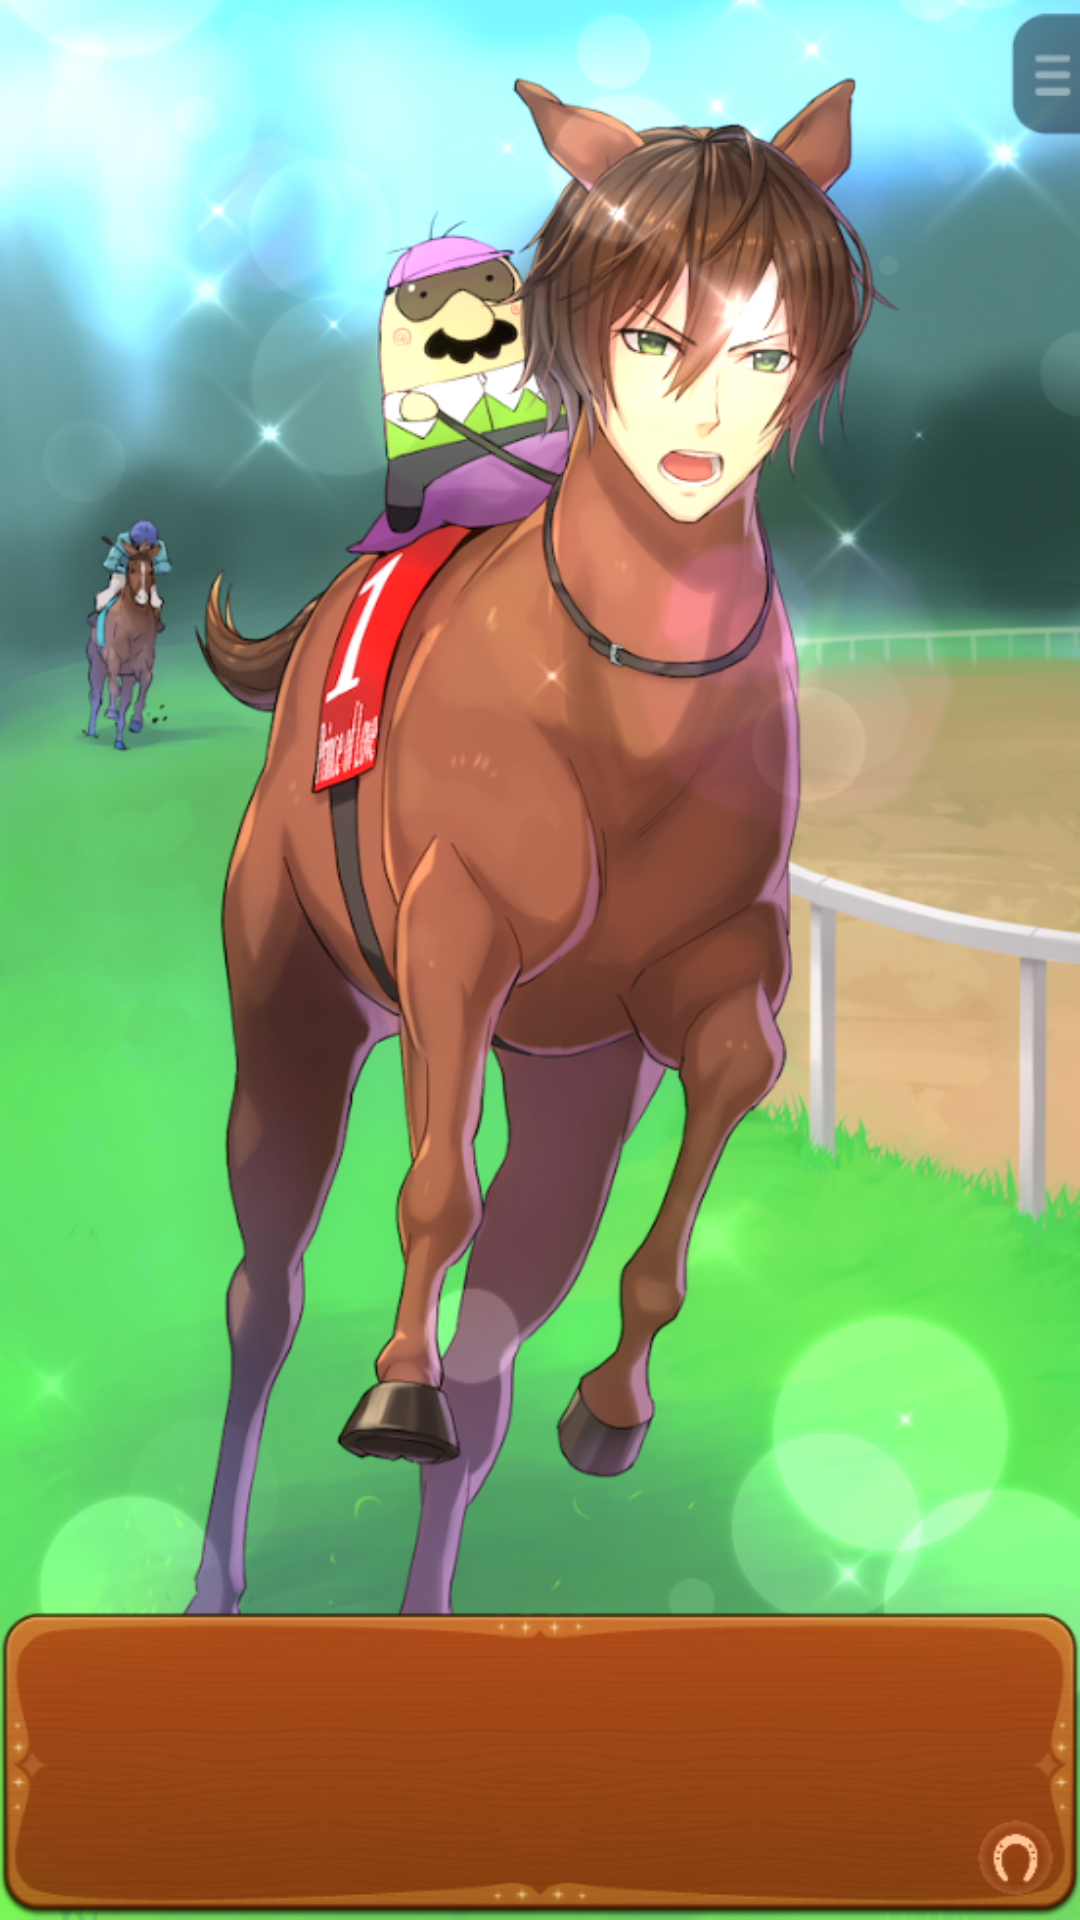 [Smartphone] My Horse Prince T8ho